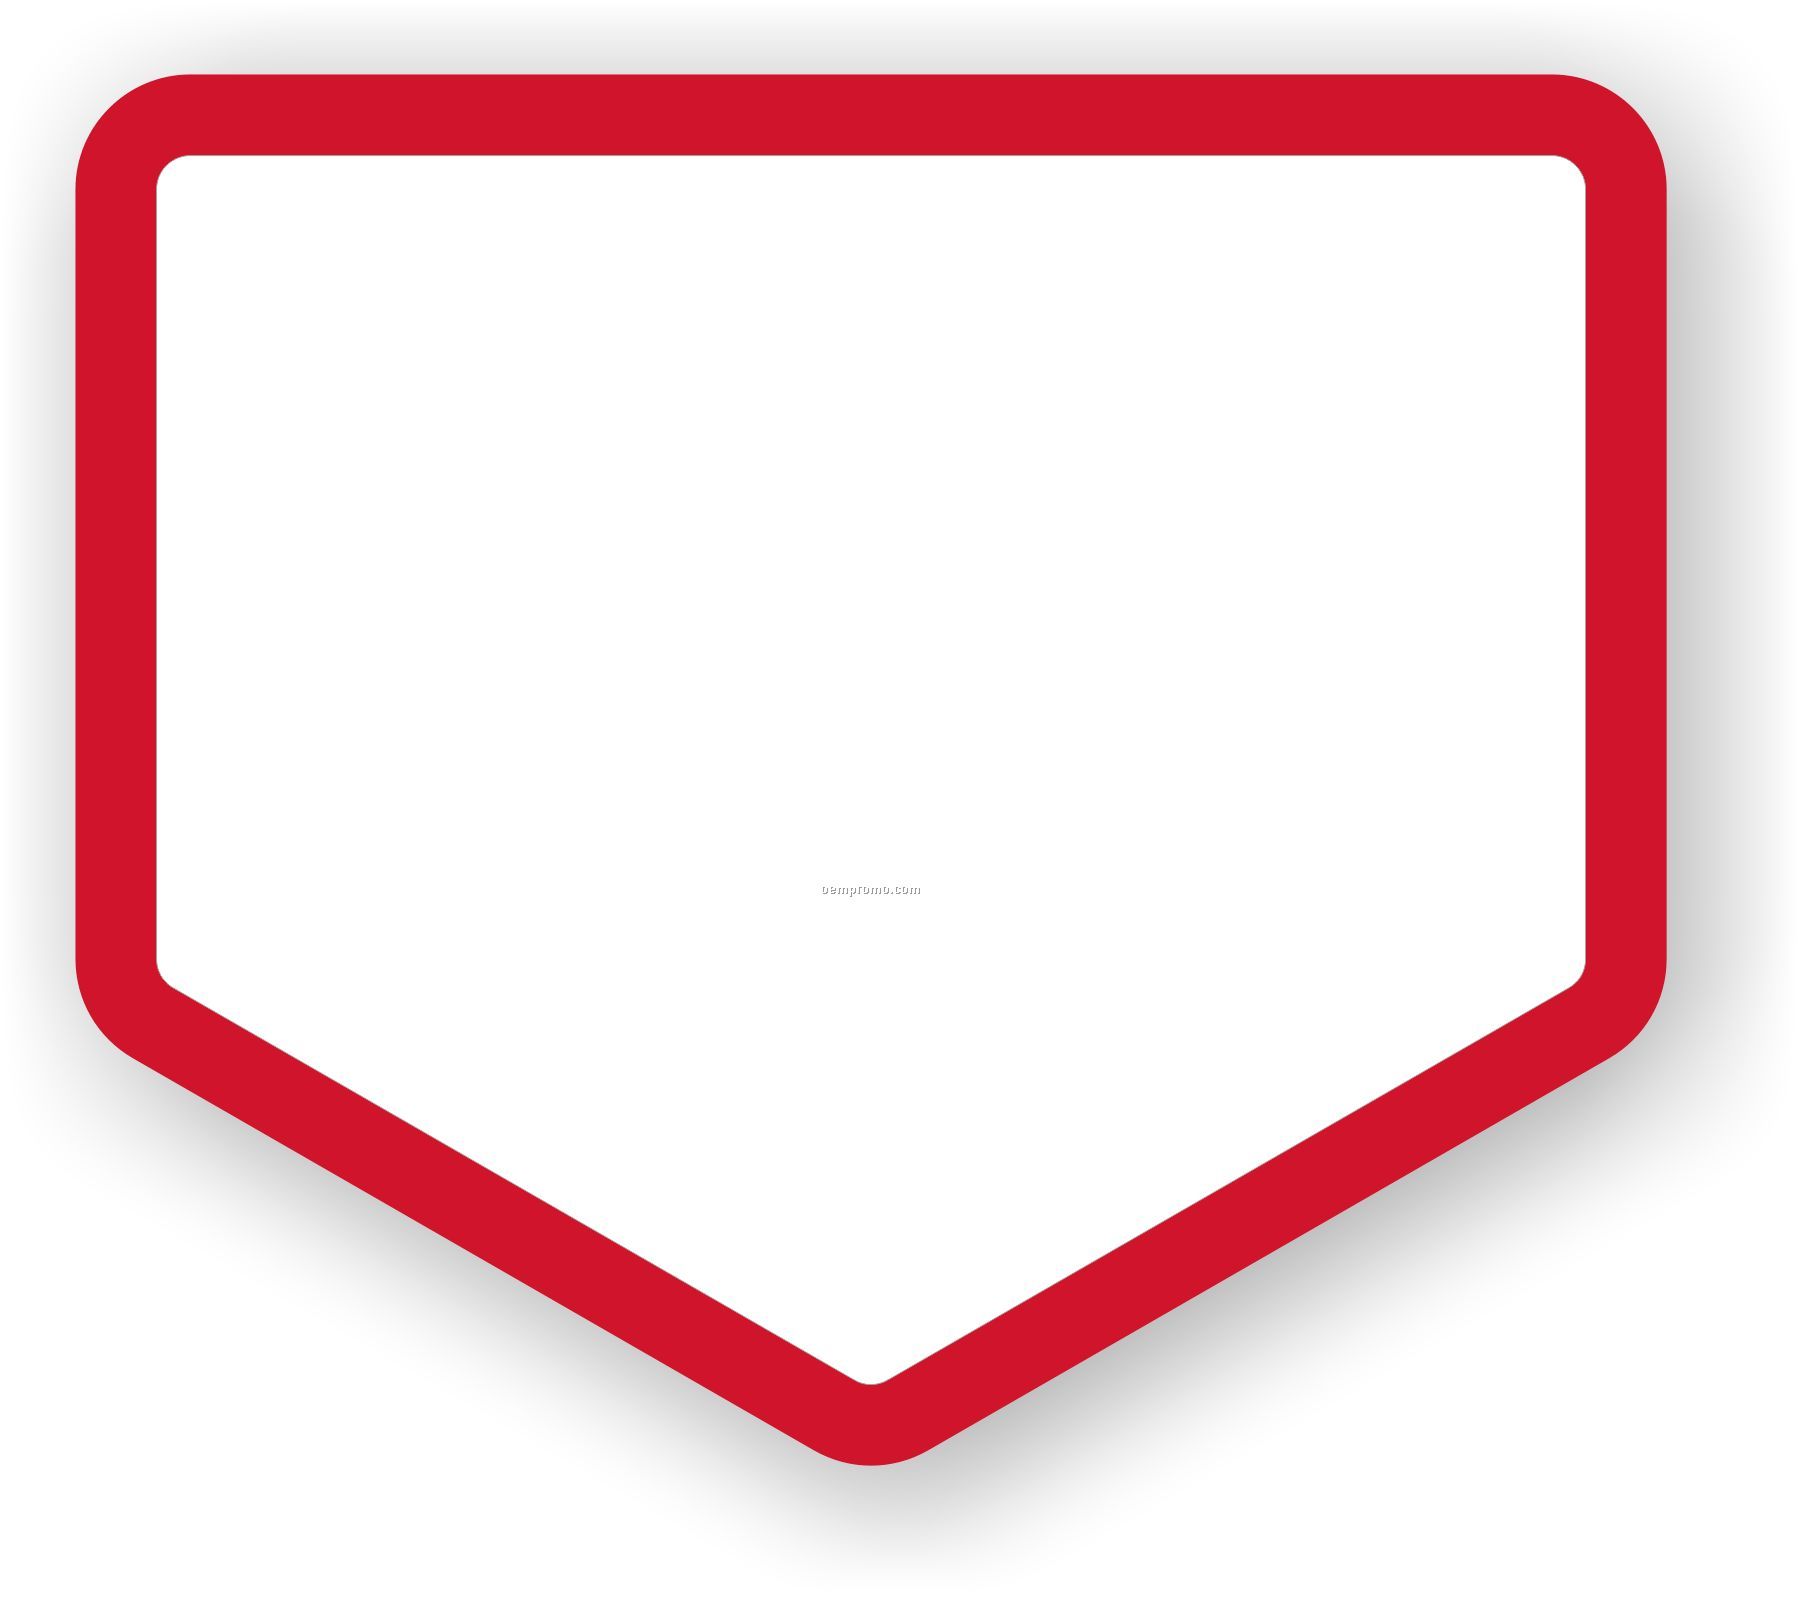 Best Photos of Baseball Plate Clip Art - Baseball Home Plate Clip ...